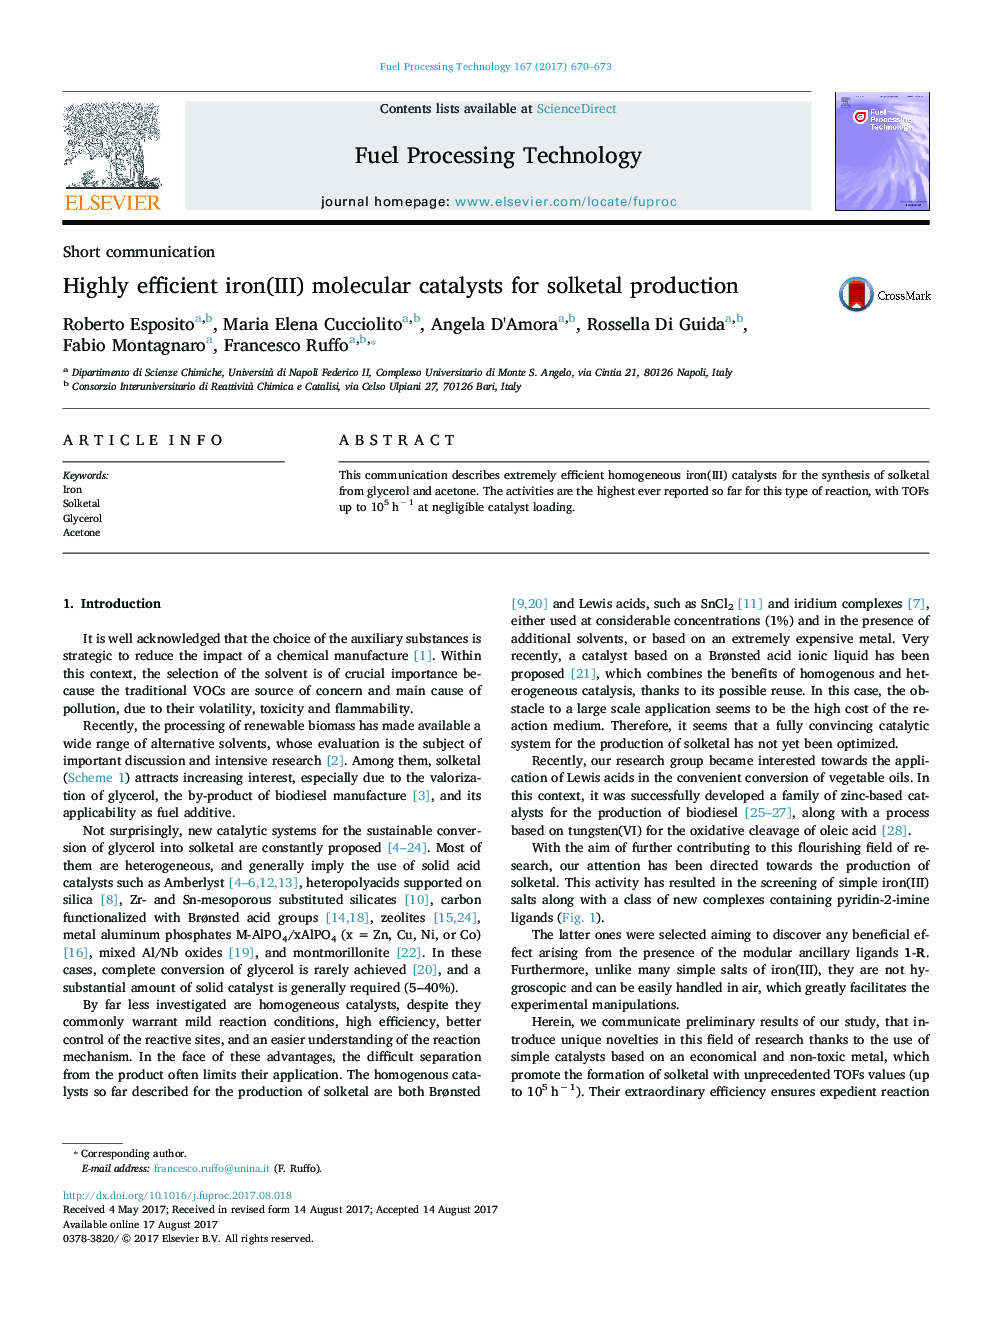 Highly efficient iron(III) molecular catalysts for solketal production